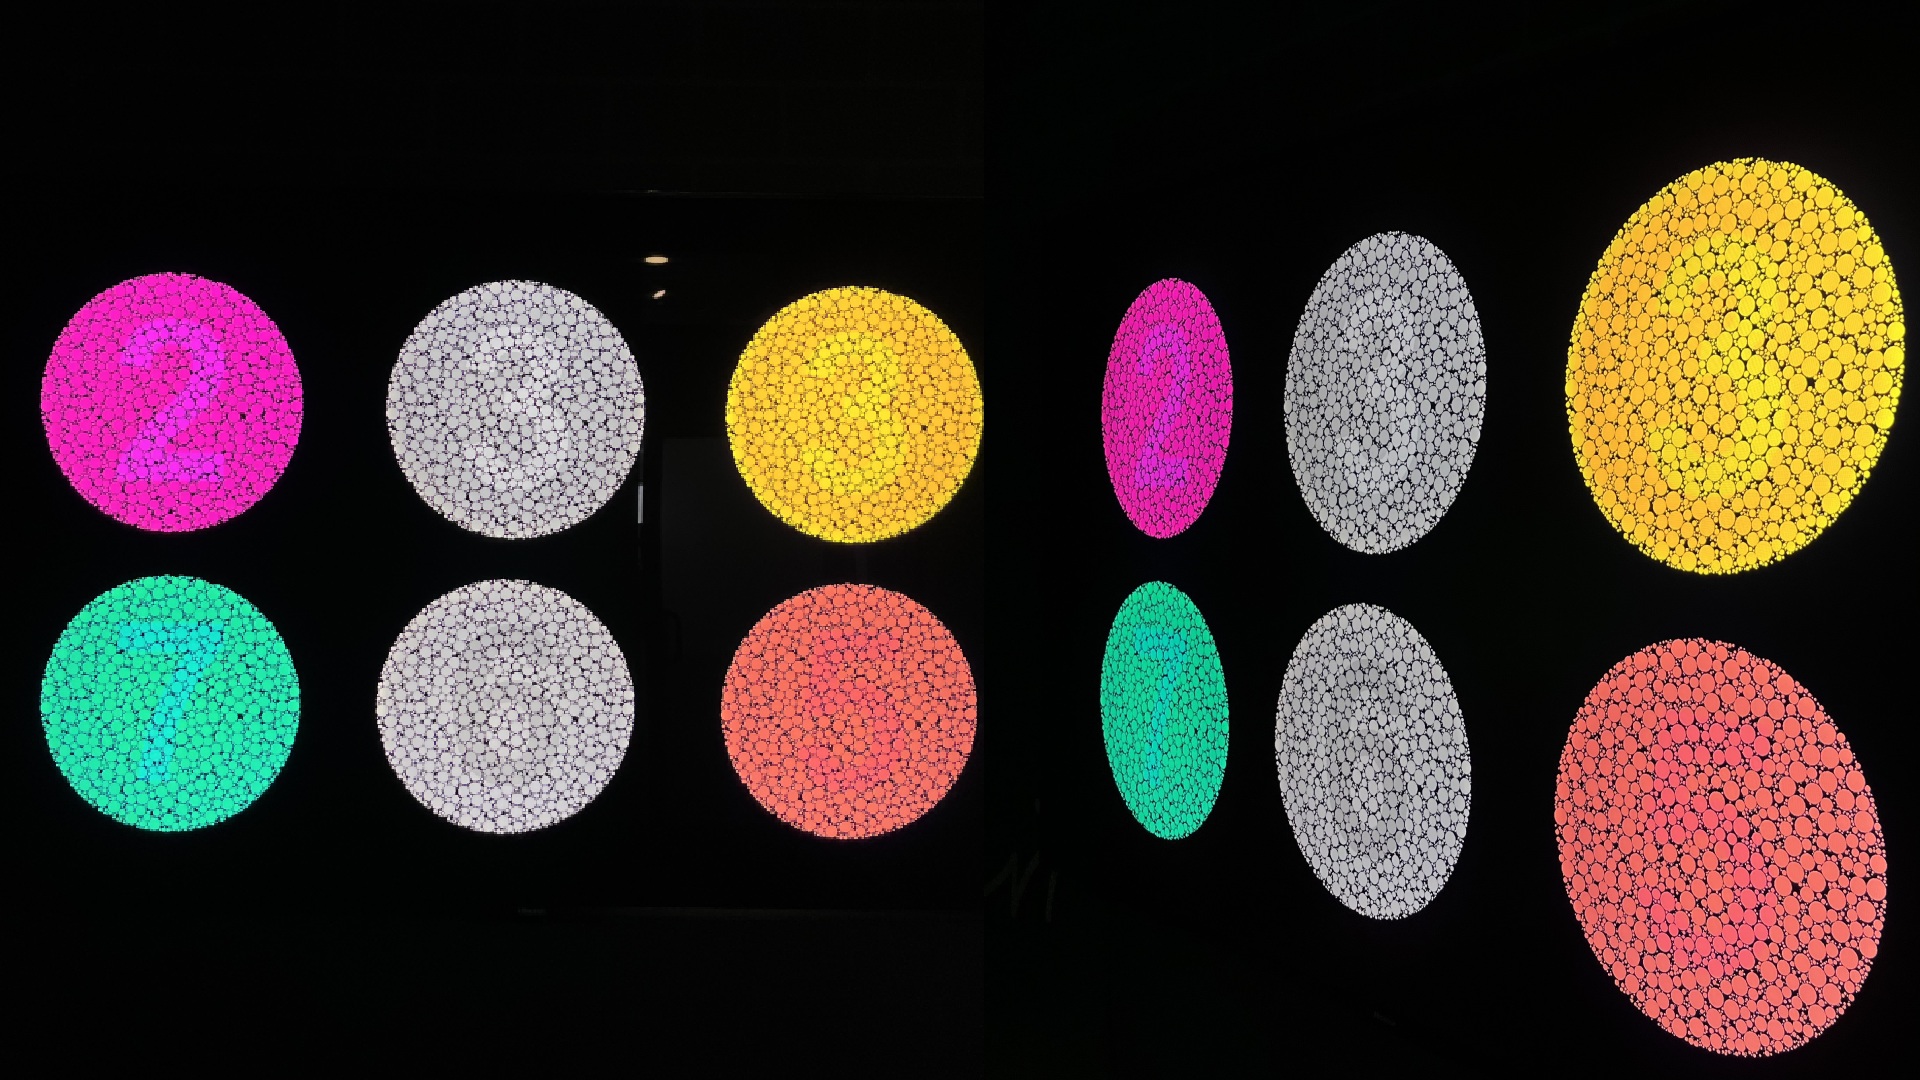 Color test pattern shown on the Hisense U9N TV